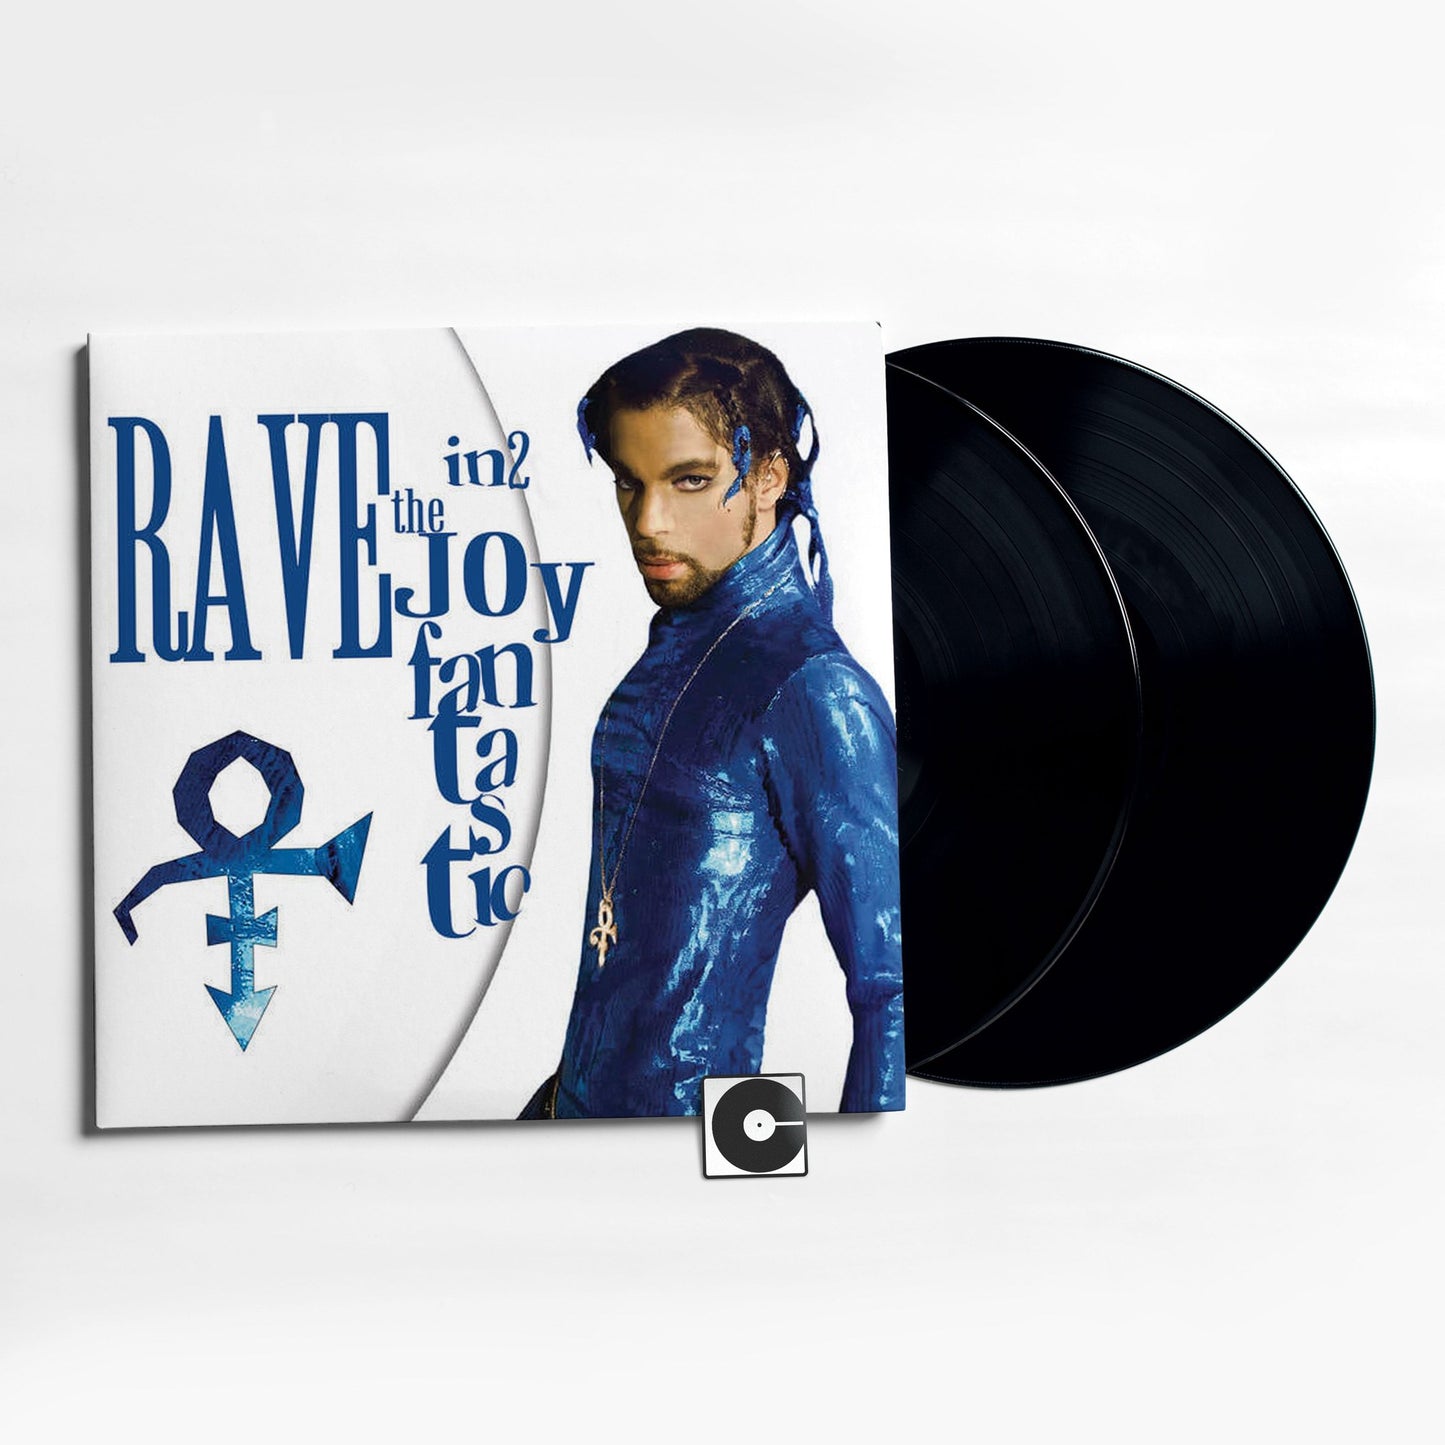 Prince - "Rave In2 The Joy Fantastic"